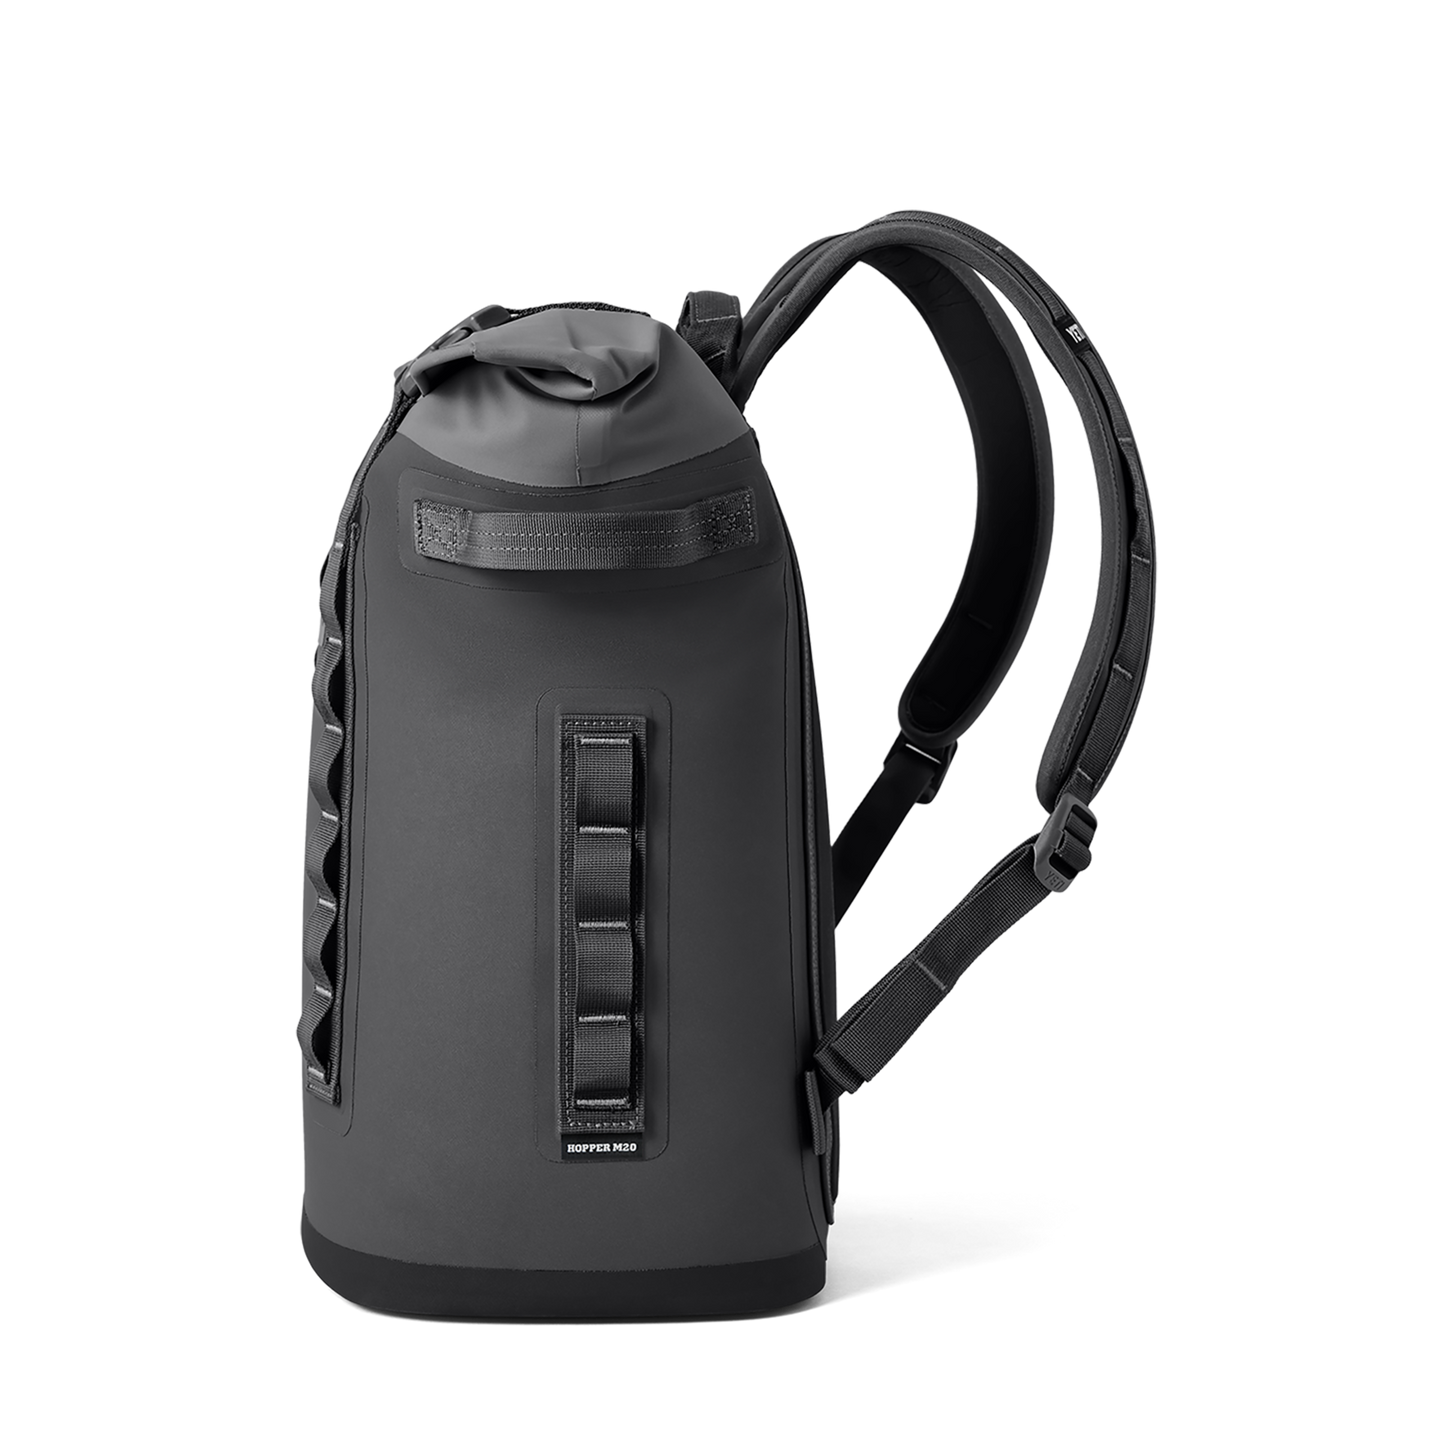 YETI Hopper M20 Soft Backpack Cooler, Charcoal